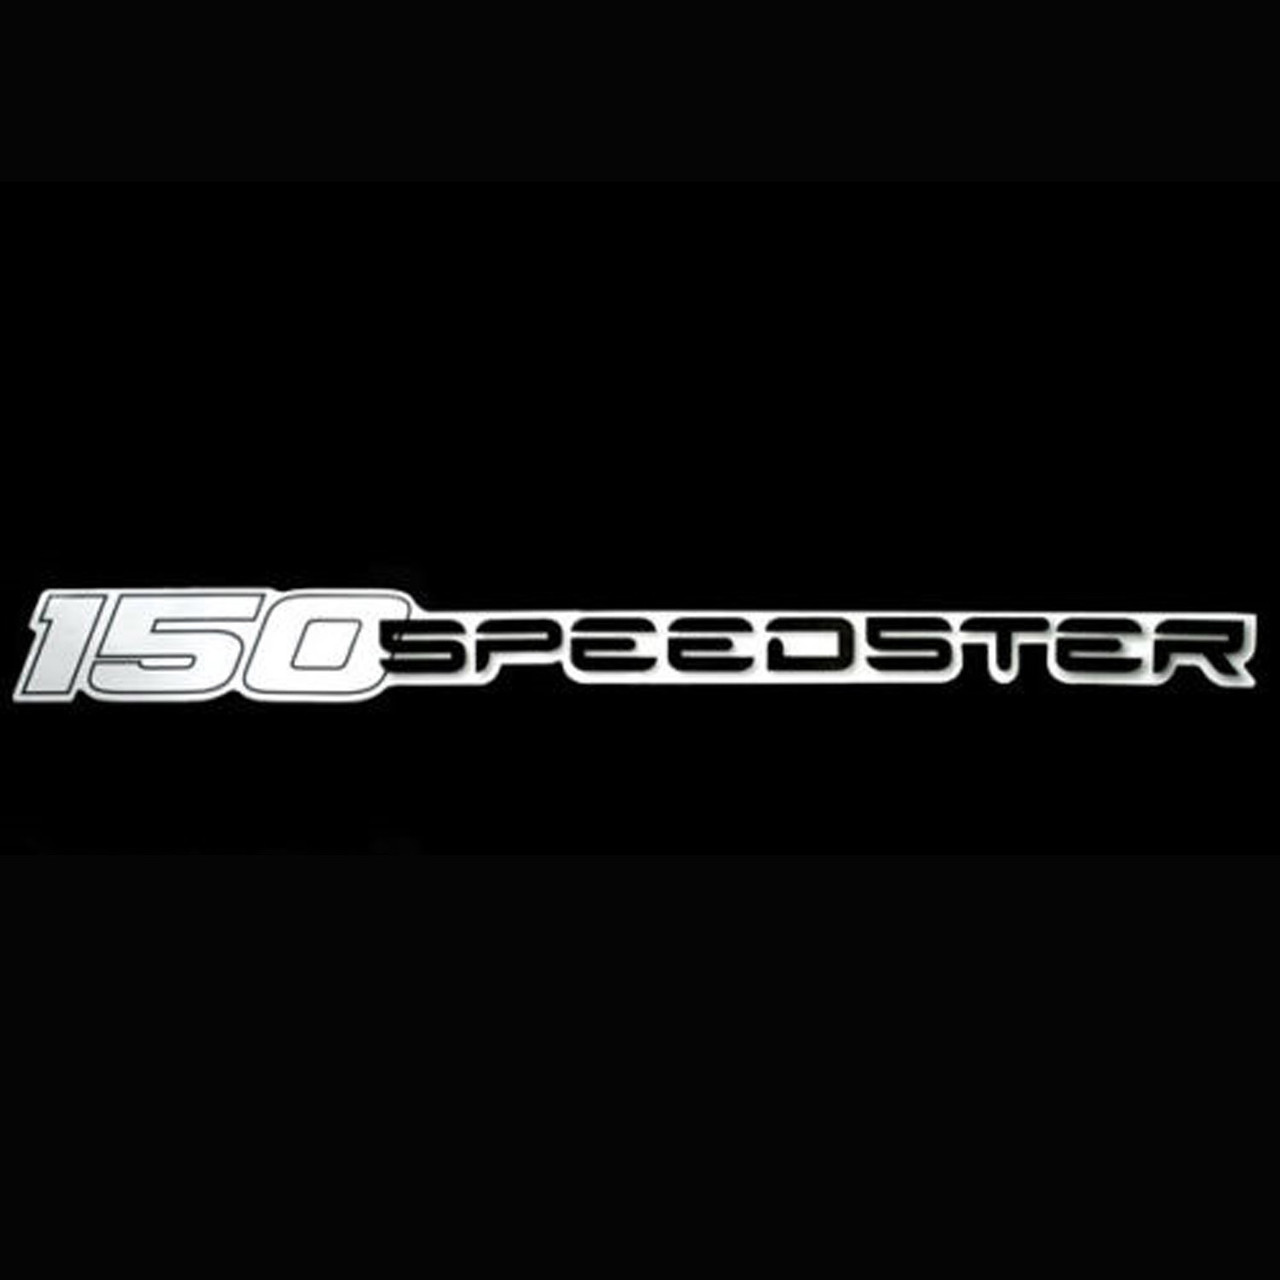 Sea-Doo New OEM Decal-150 Speedster, 204902026